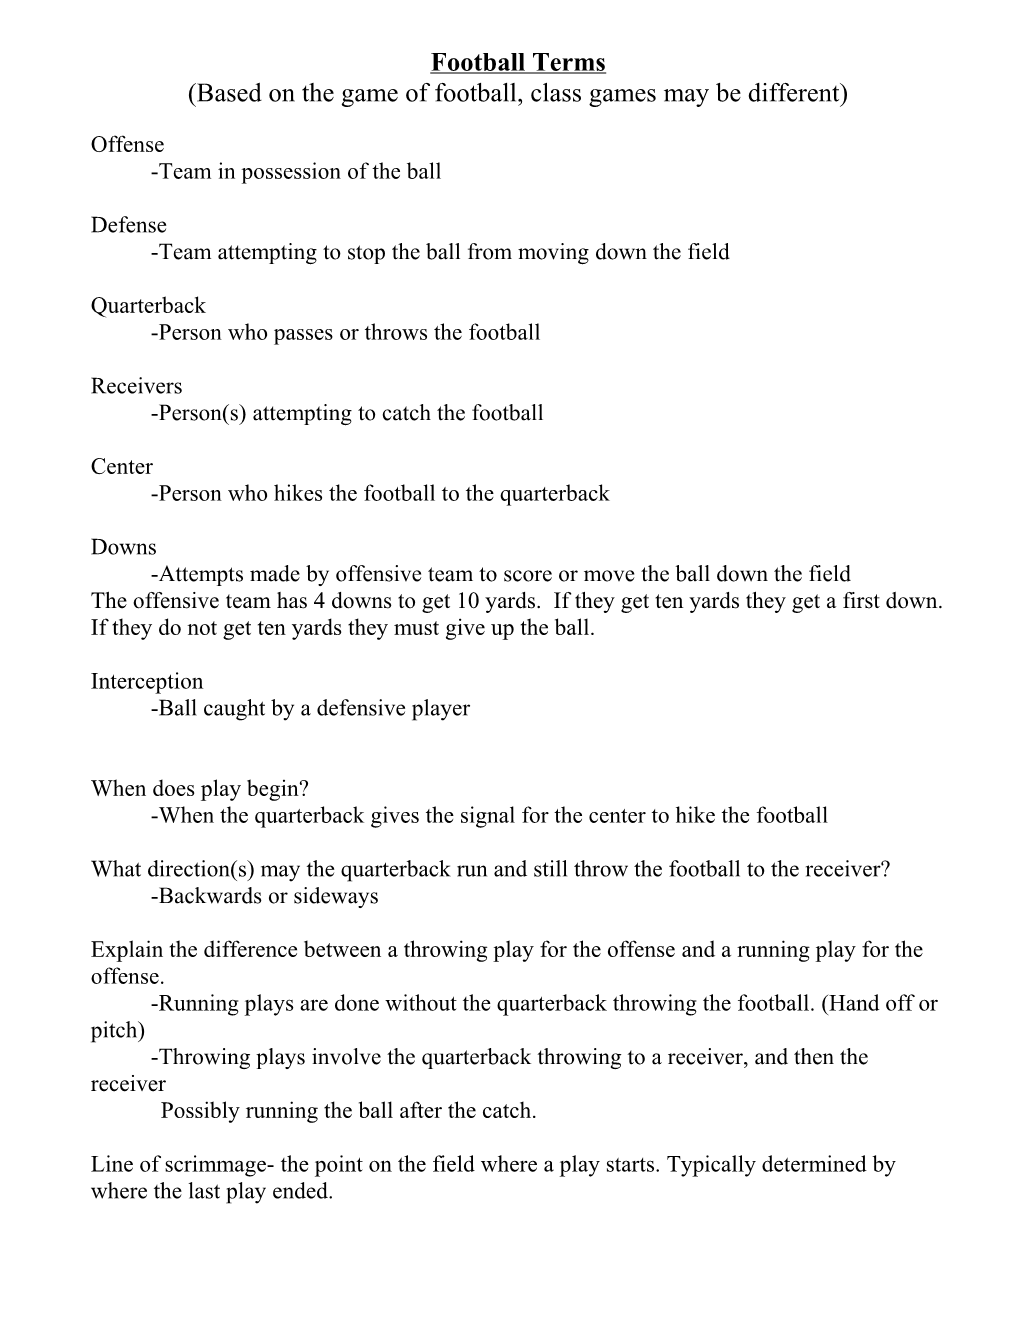 Football Unit Study Guide